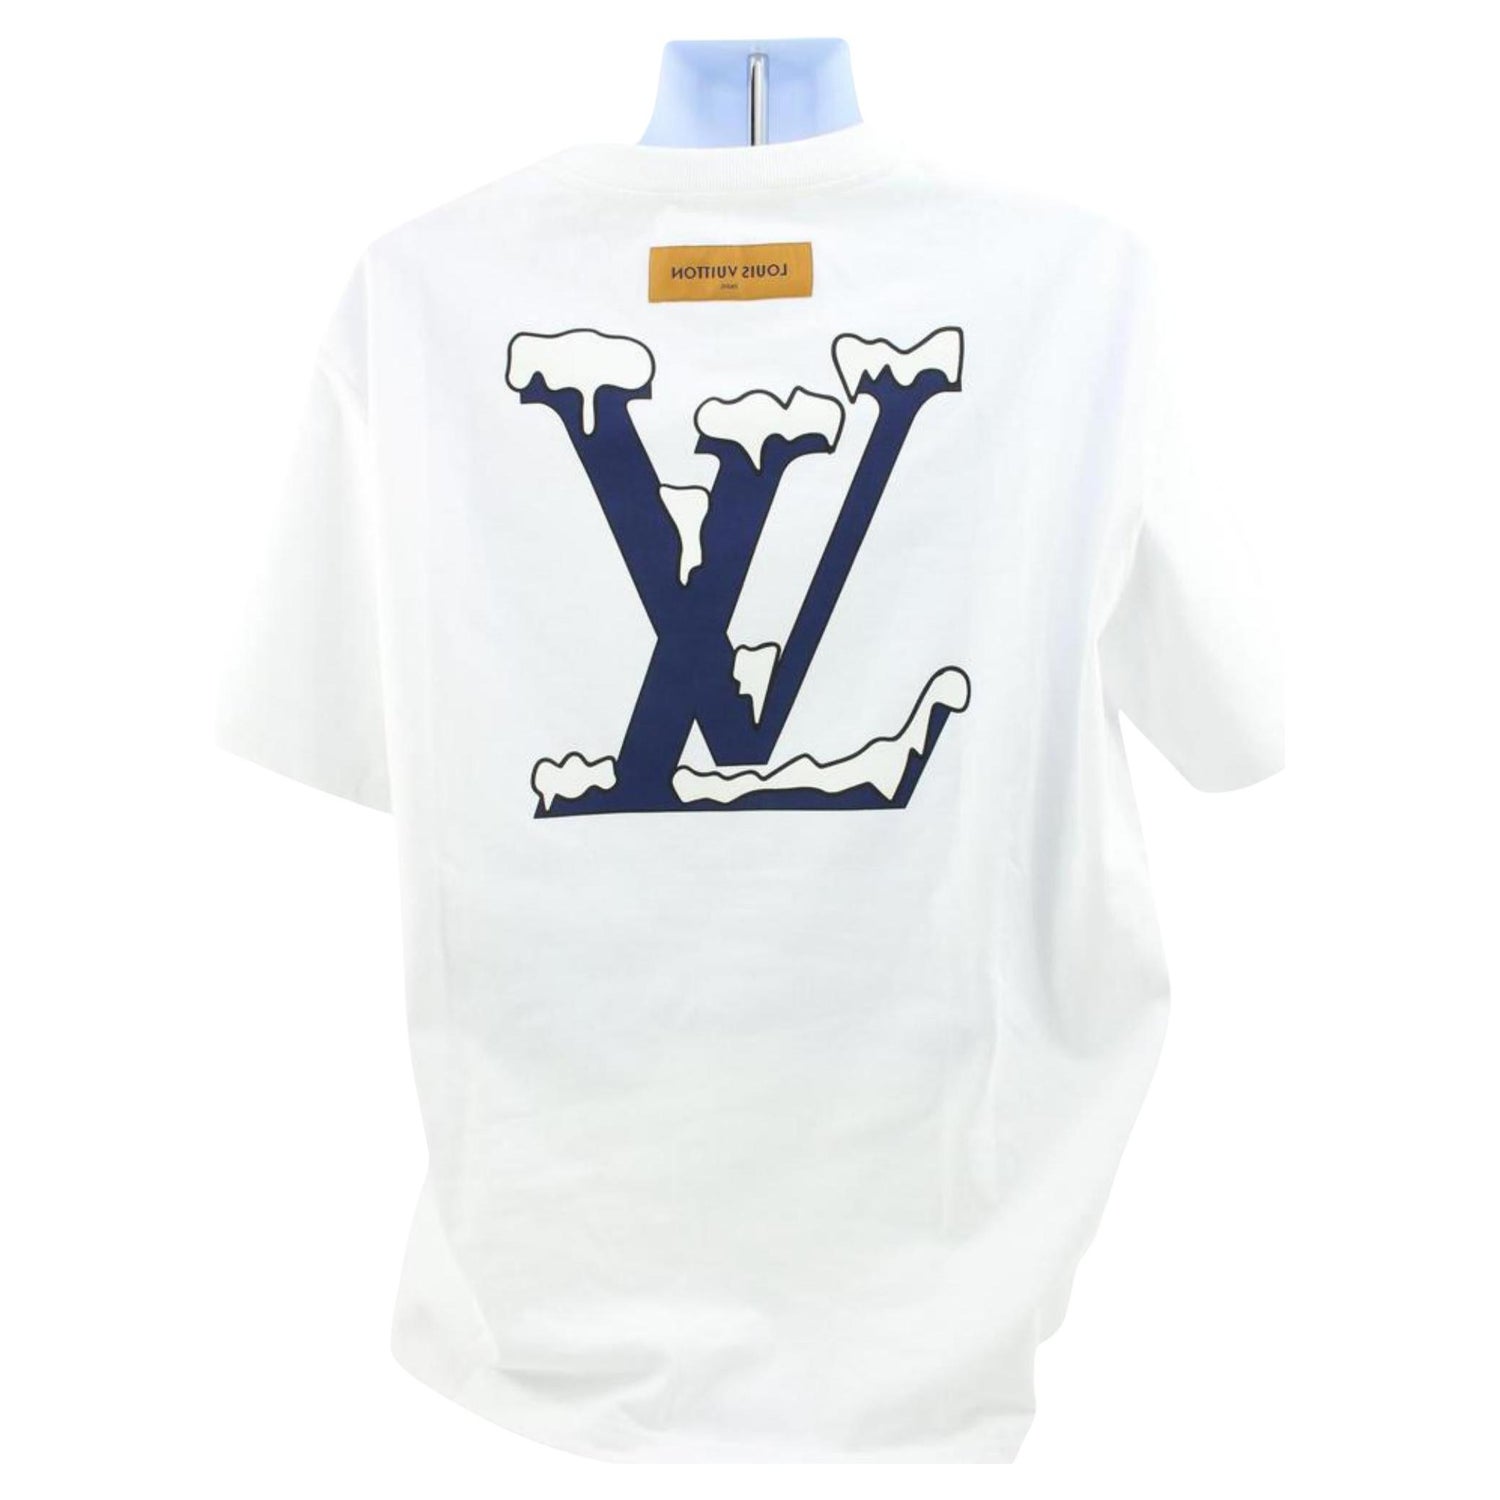 LV VELVET MONOGRAM T-SHIRT  Monogram t shirts, T shirt, Clothes design